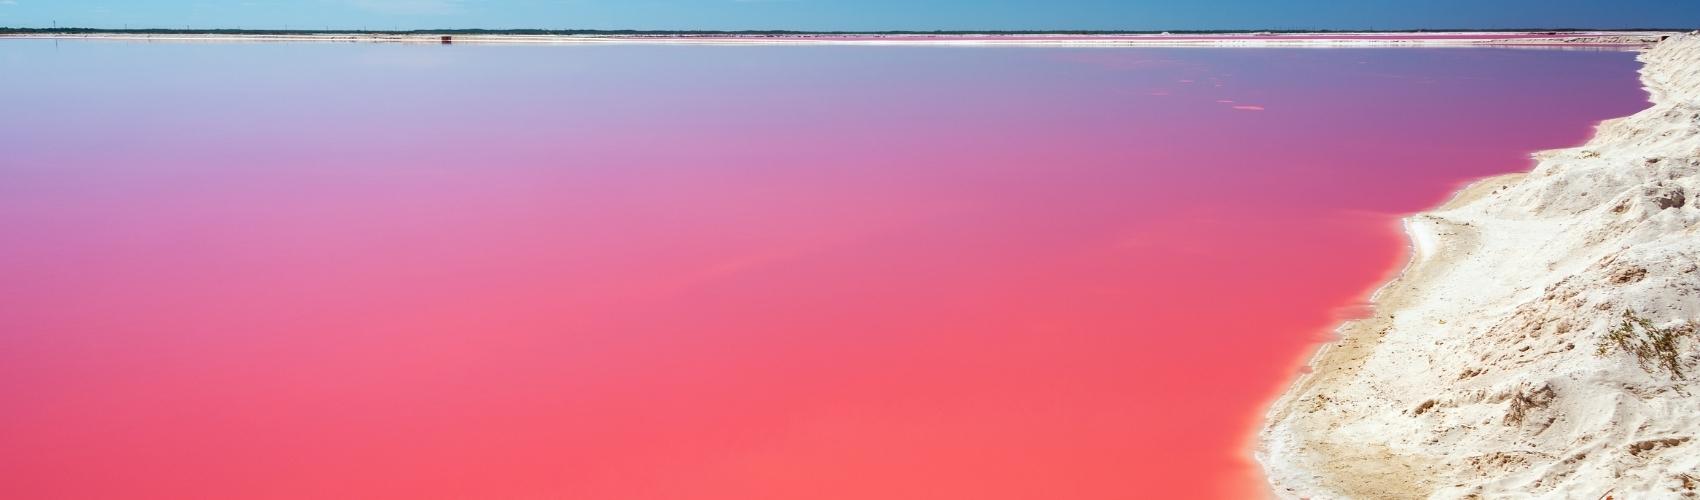 Rio Lagartos - Las Coloradas (Pink lake) Banner